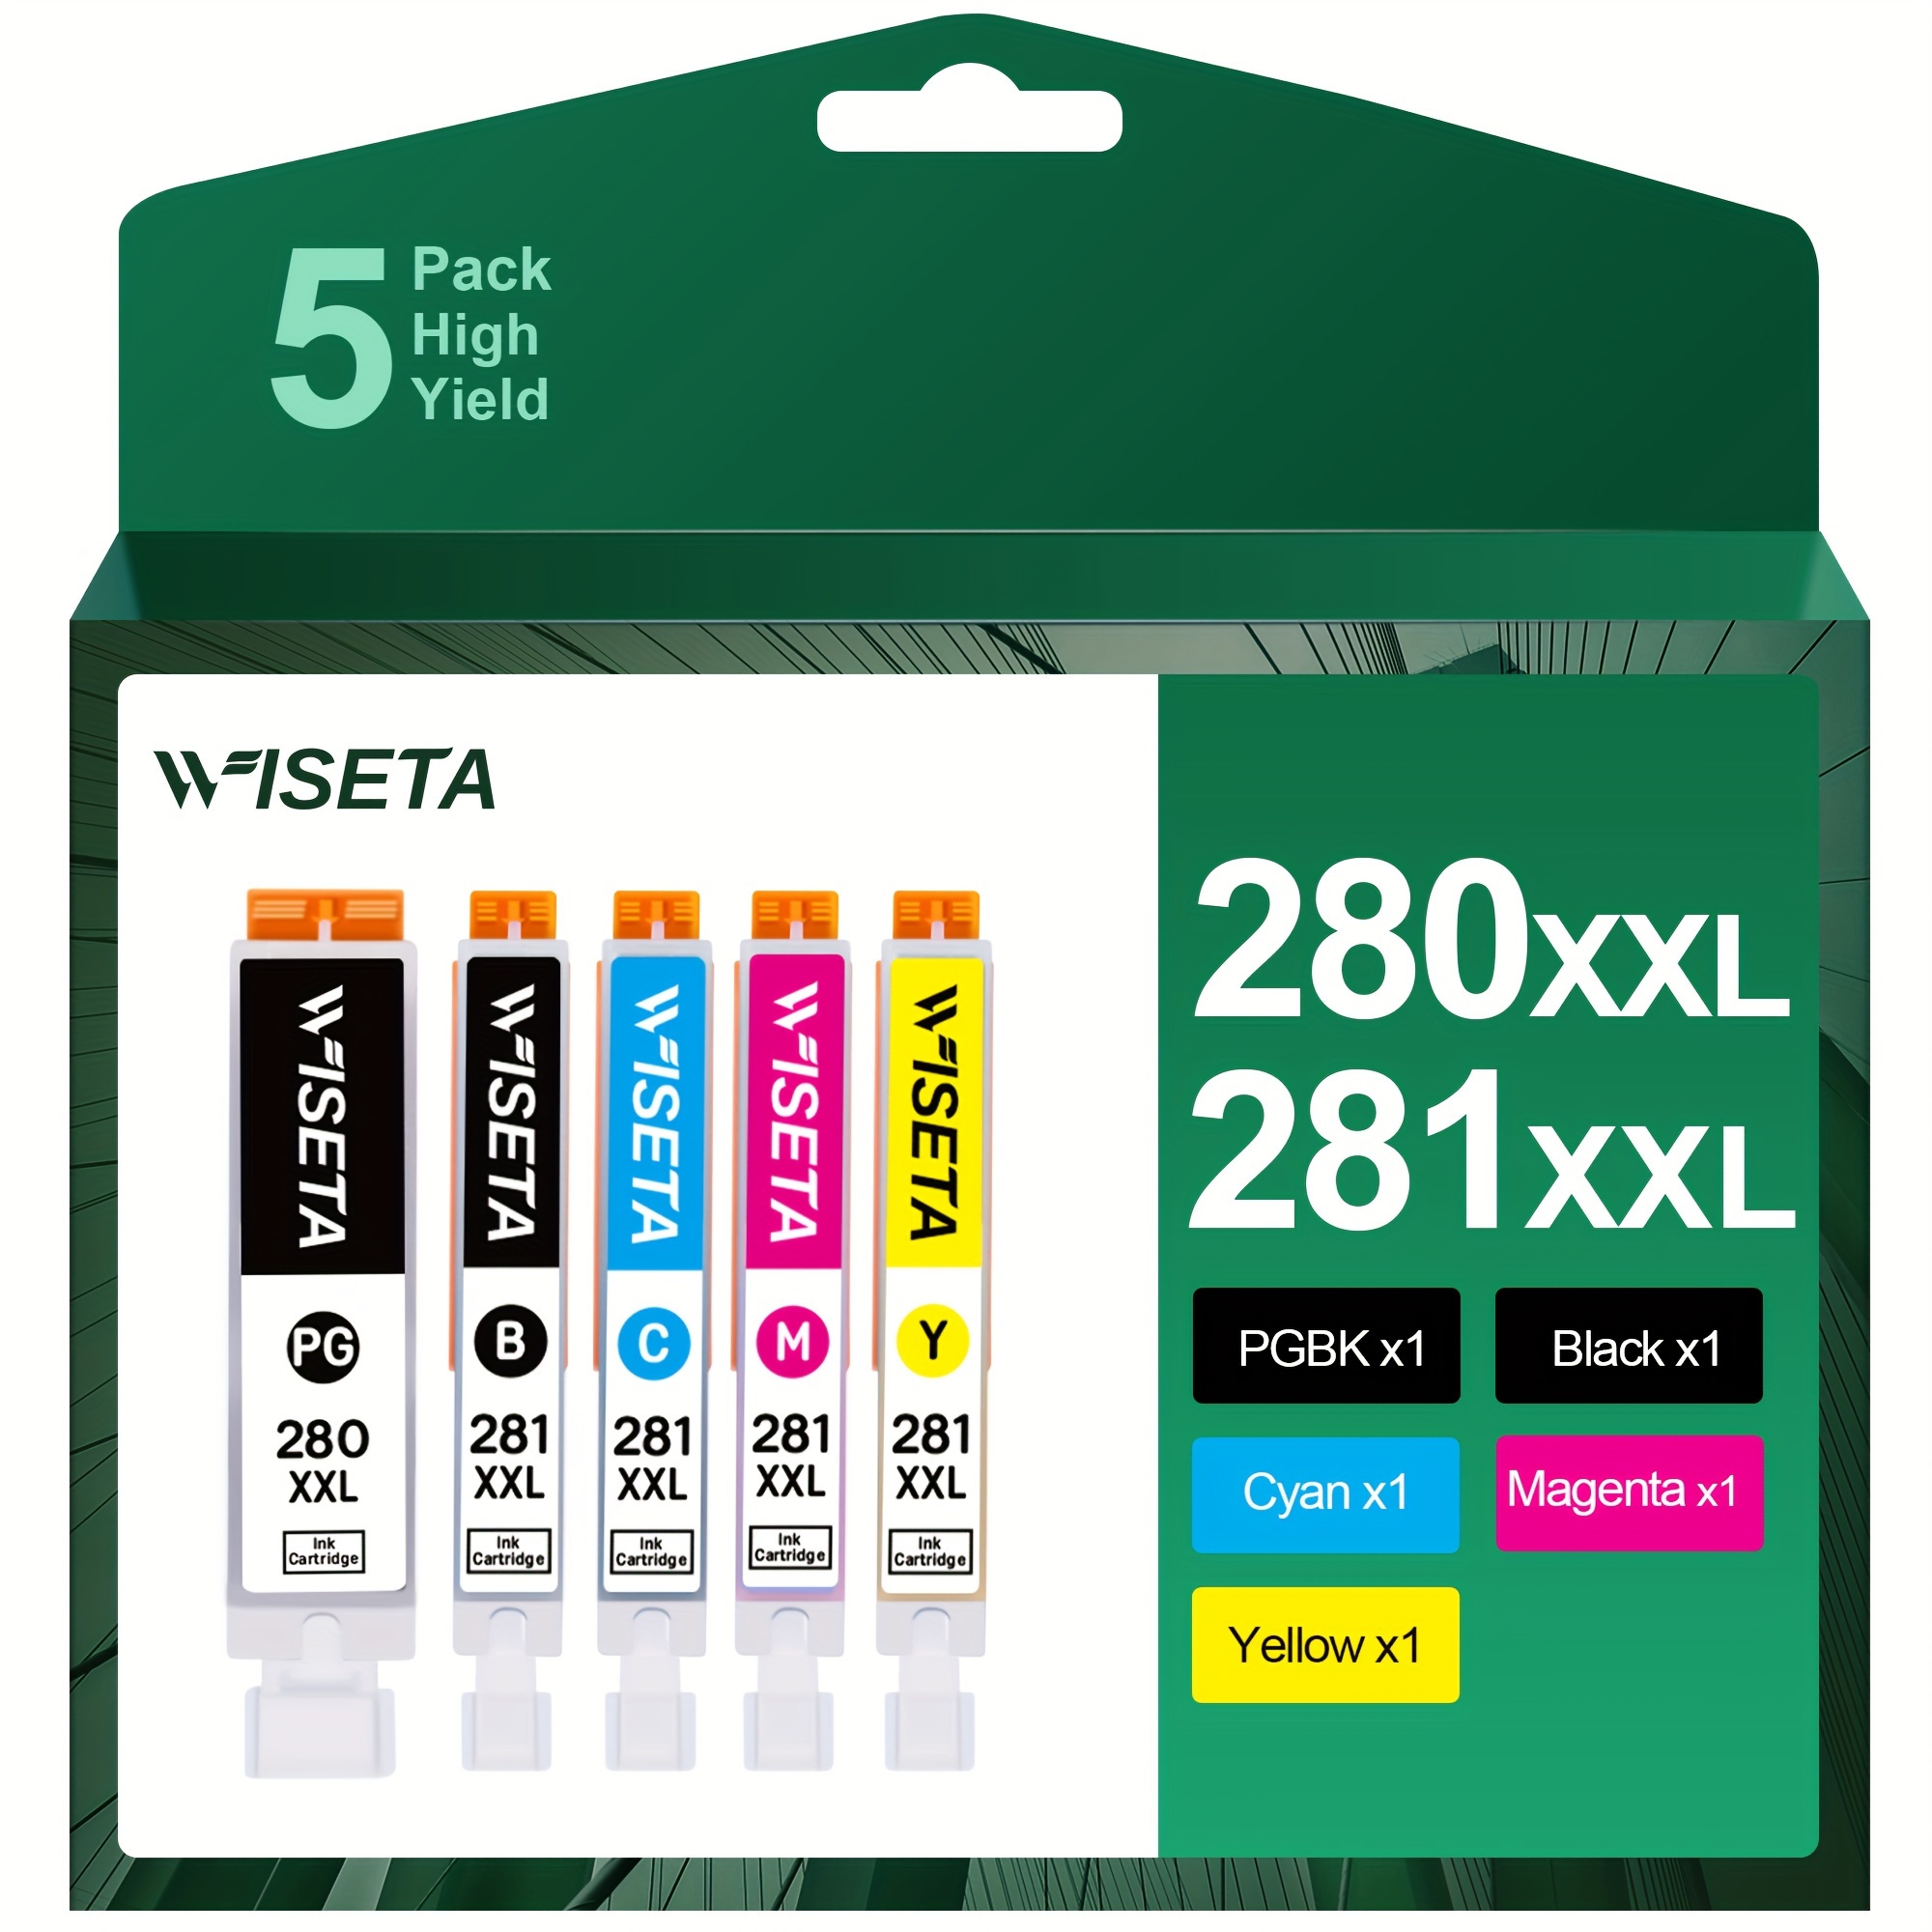 

Wiseta Replacement For Pgi-280xxl Cli-281xxl 280 Xxl 281 Xxl Compatible With Tr8620a Tr8620 Ts702a Ts9520 Tr8520 Ts6220 Ts6320 Ts8220 (5 Pack)